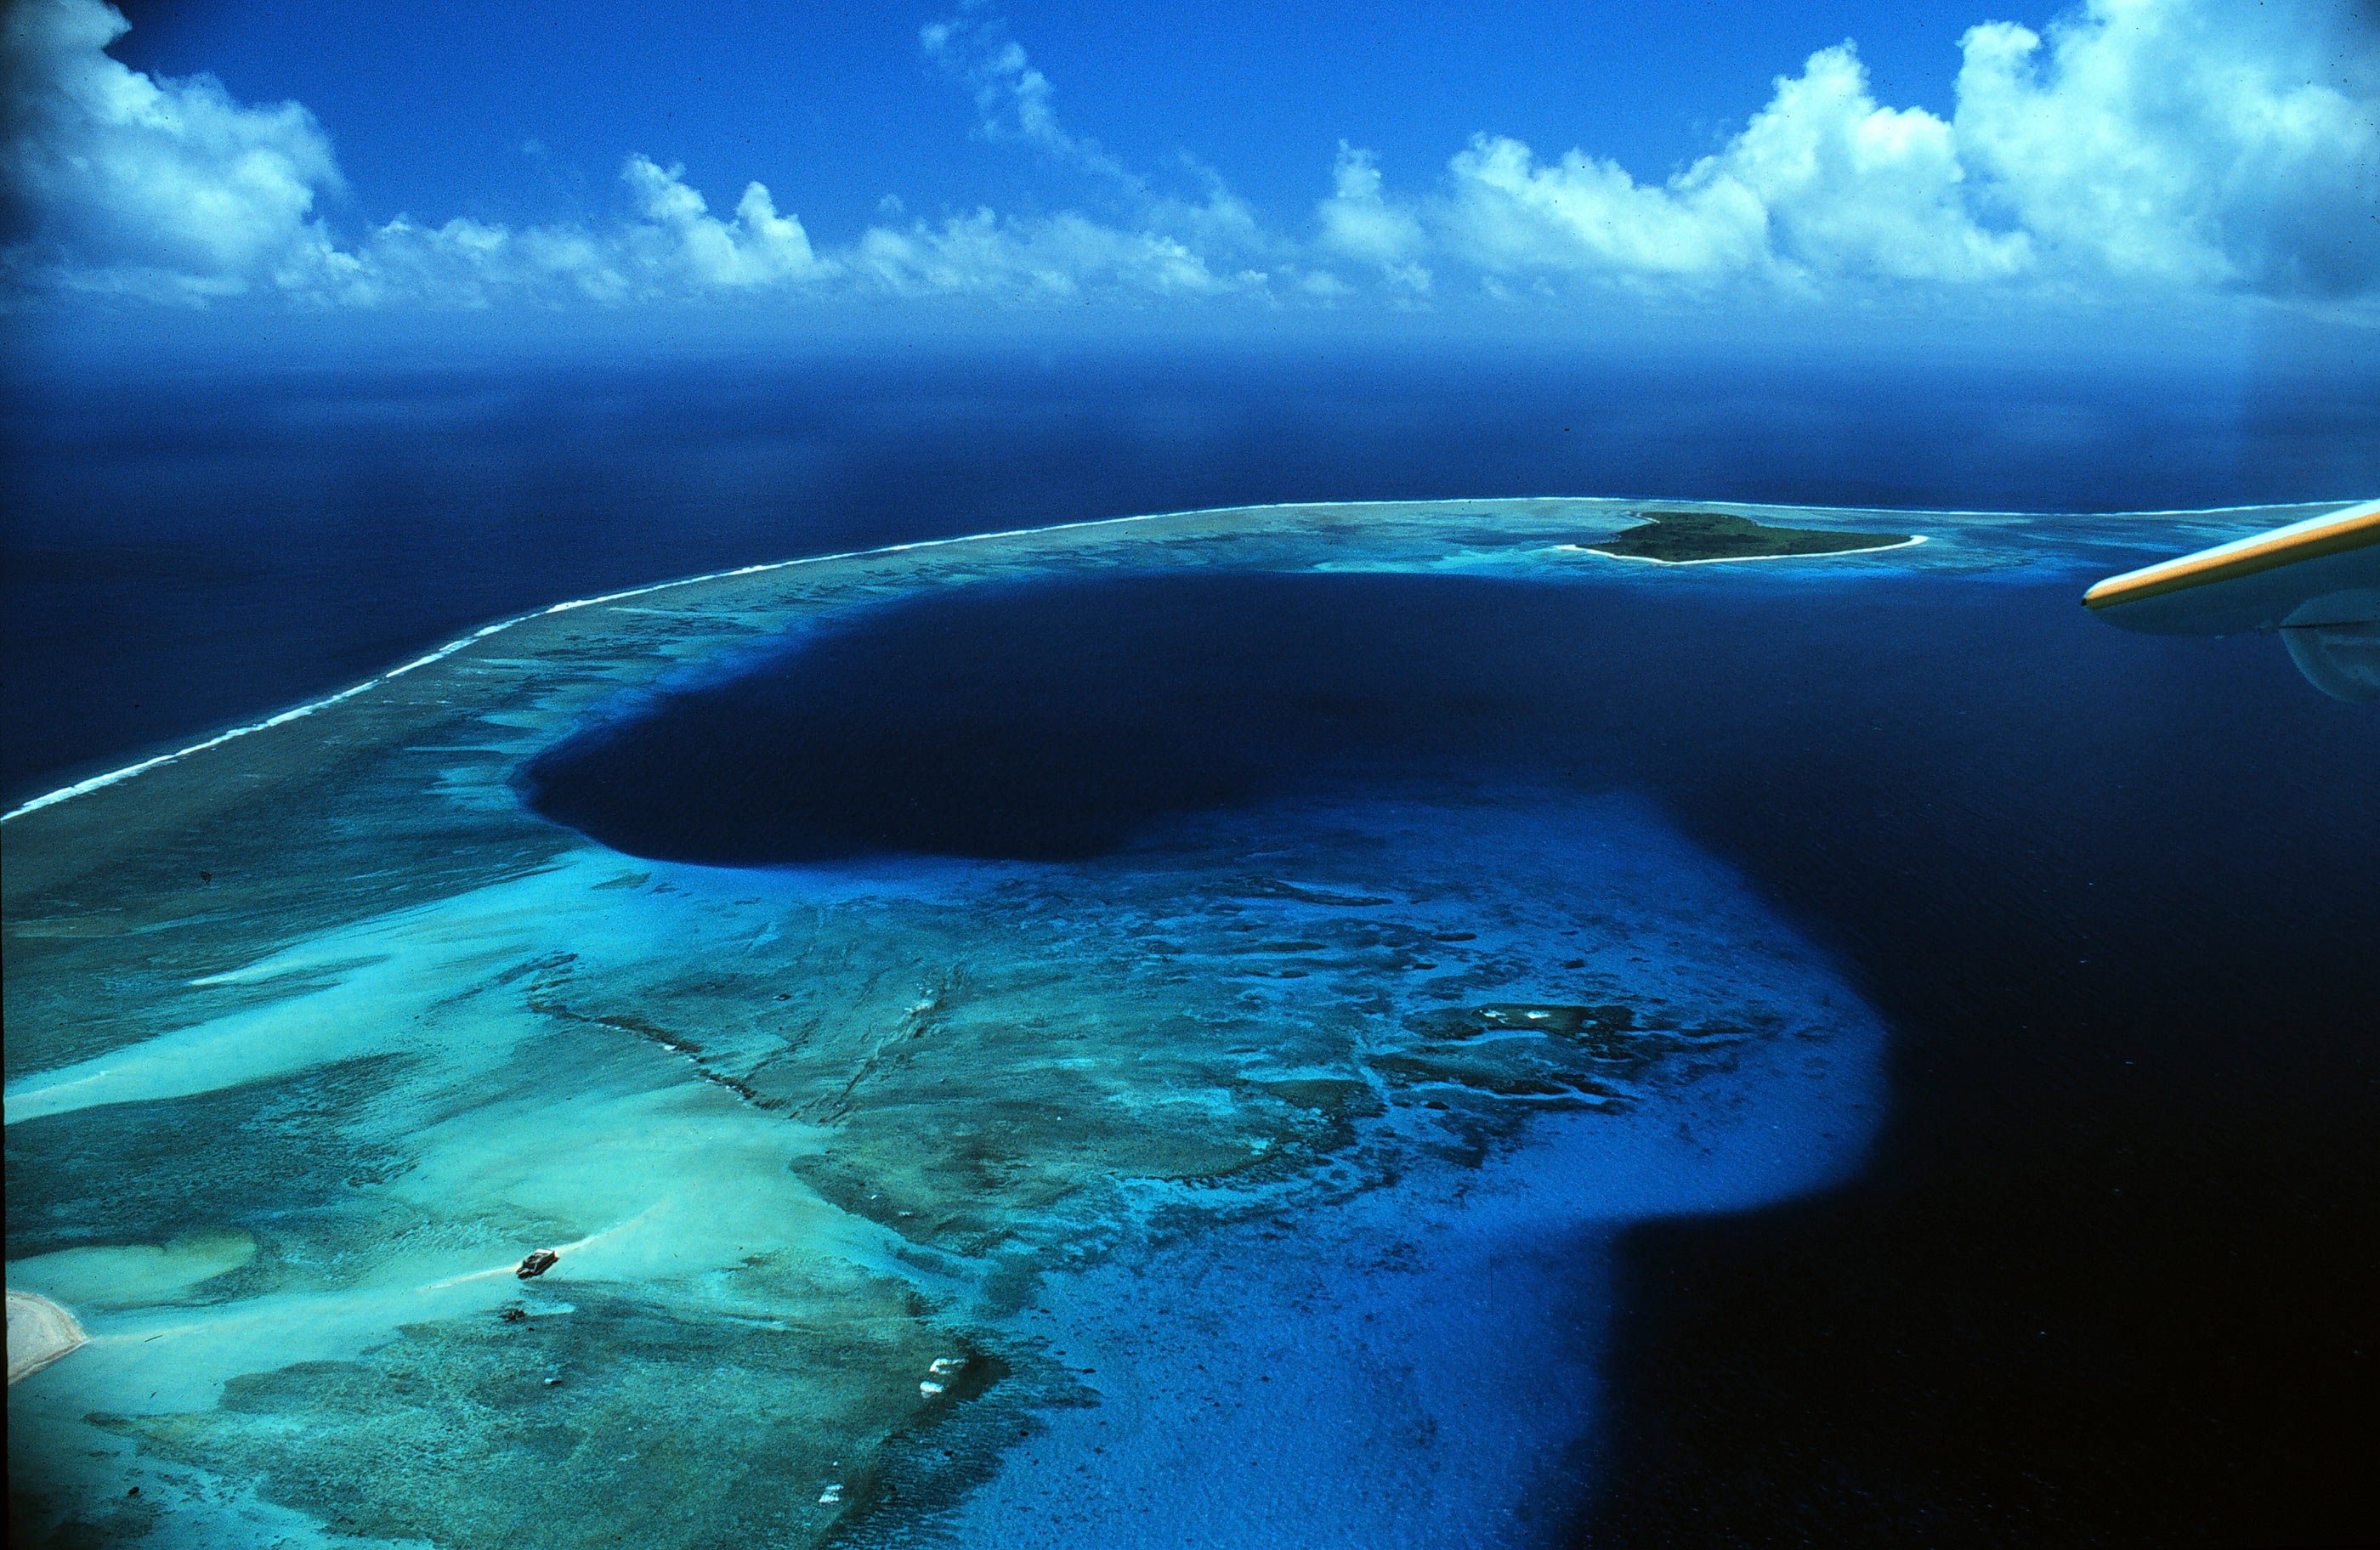 Центр тихого океана. Атолл бикини (Bikini Atoll), Маршалловы острова. Атолл на Маршалловых островах. Маршалловы острова АТО. Атолле бикини в тихом океане.